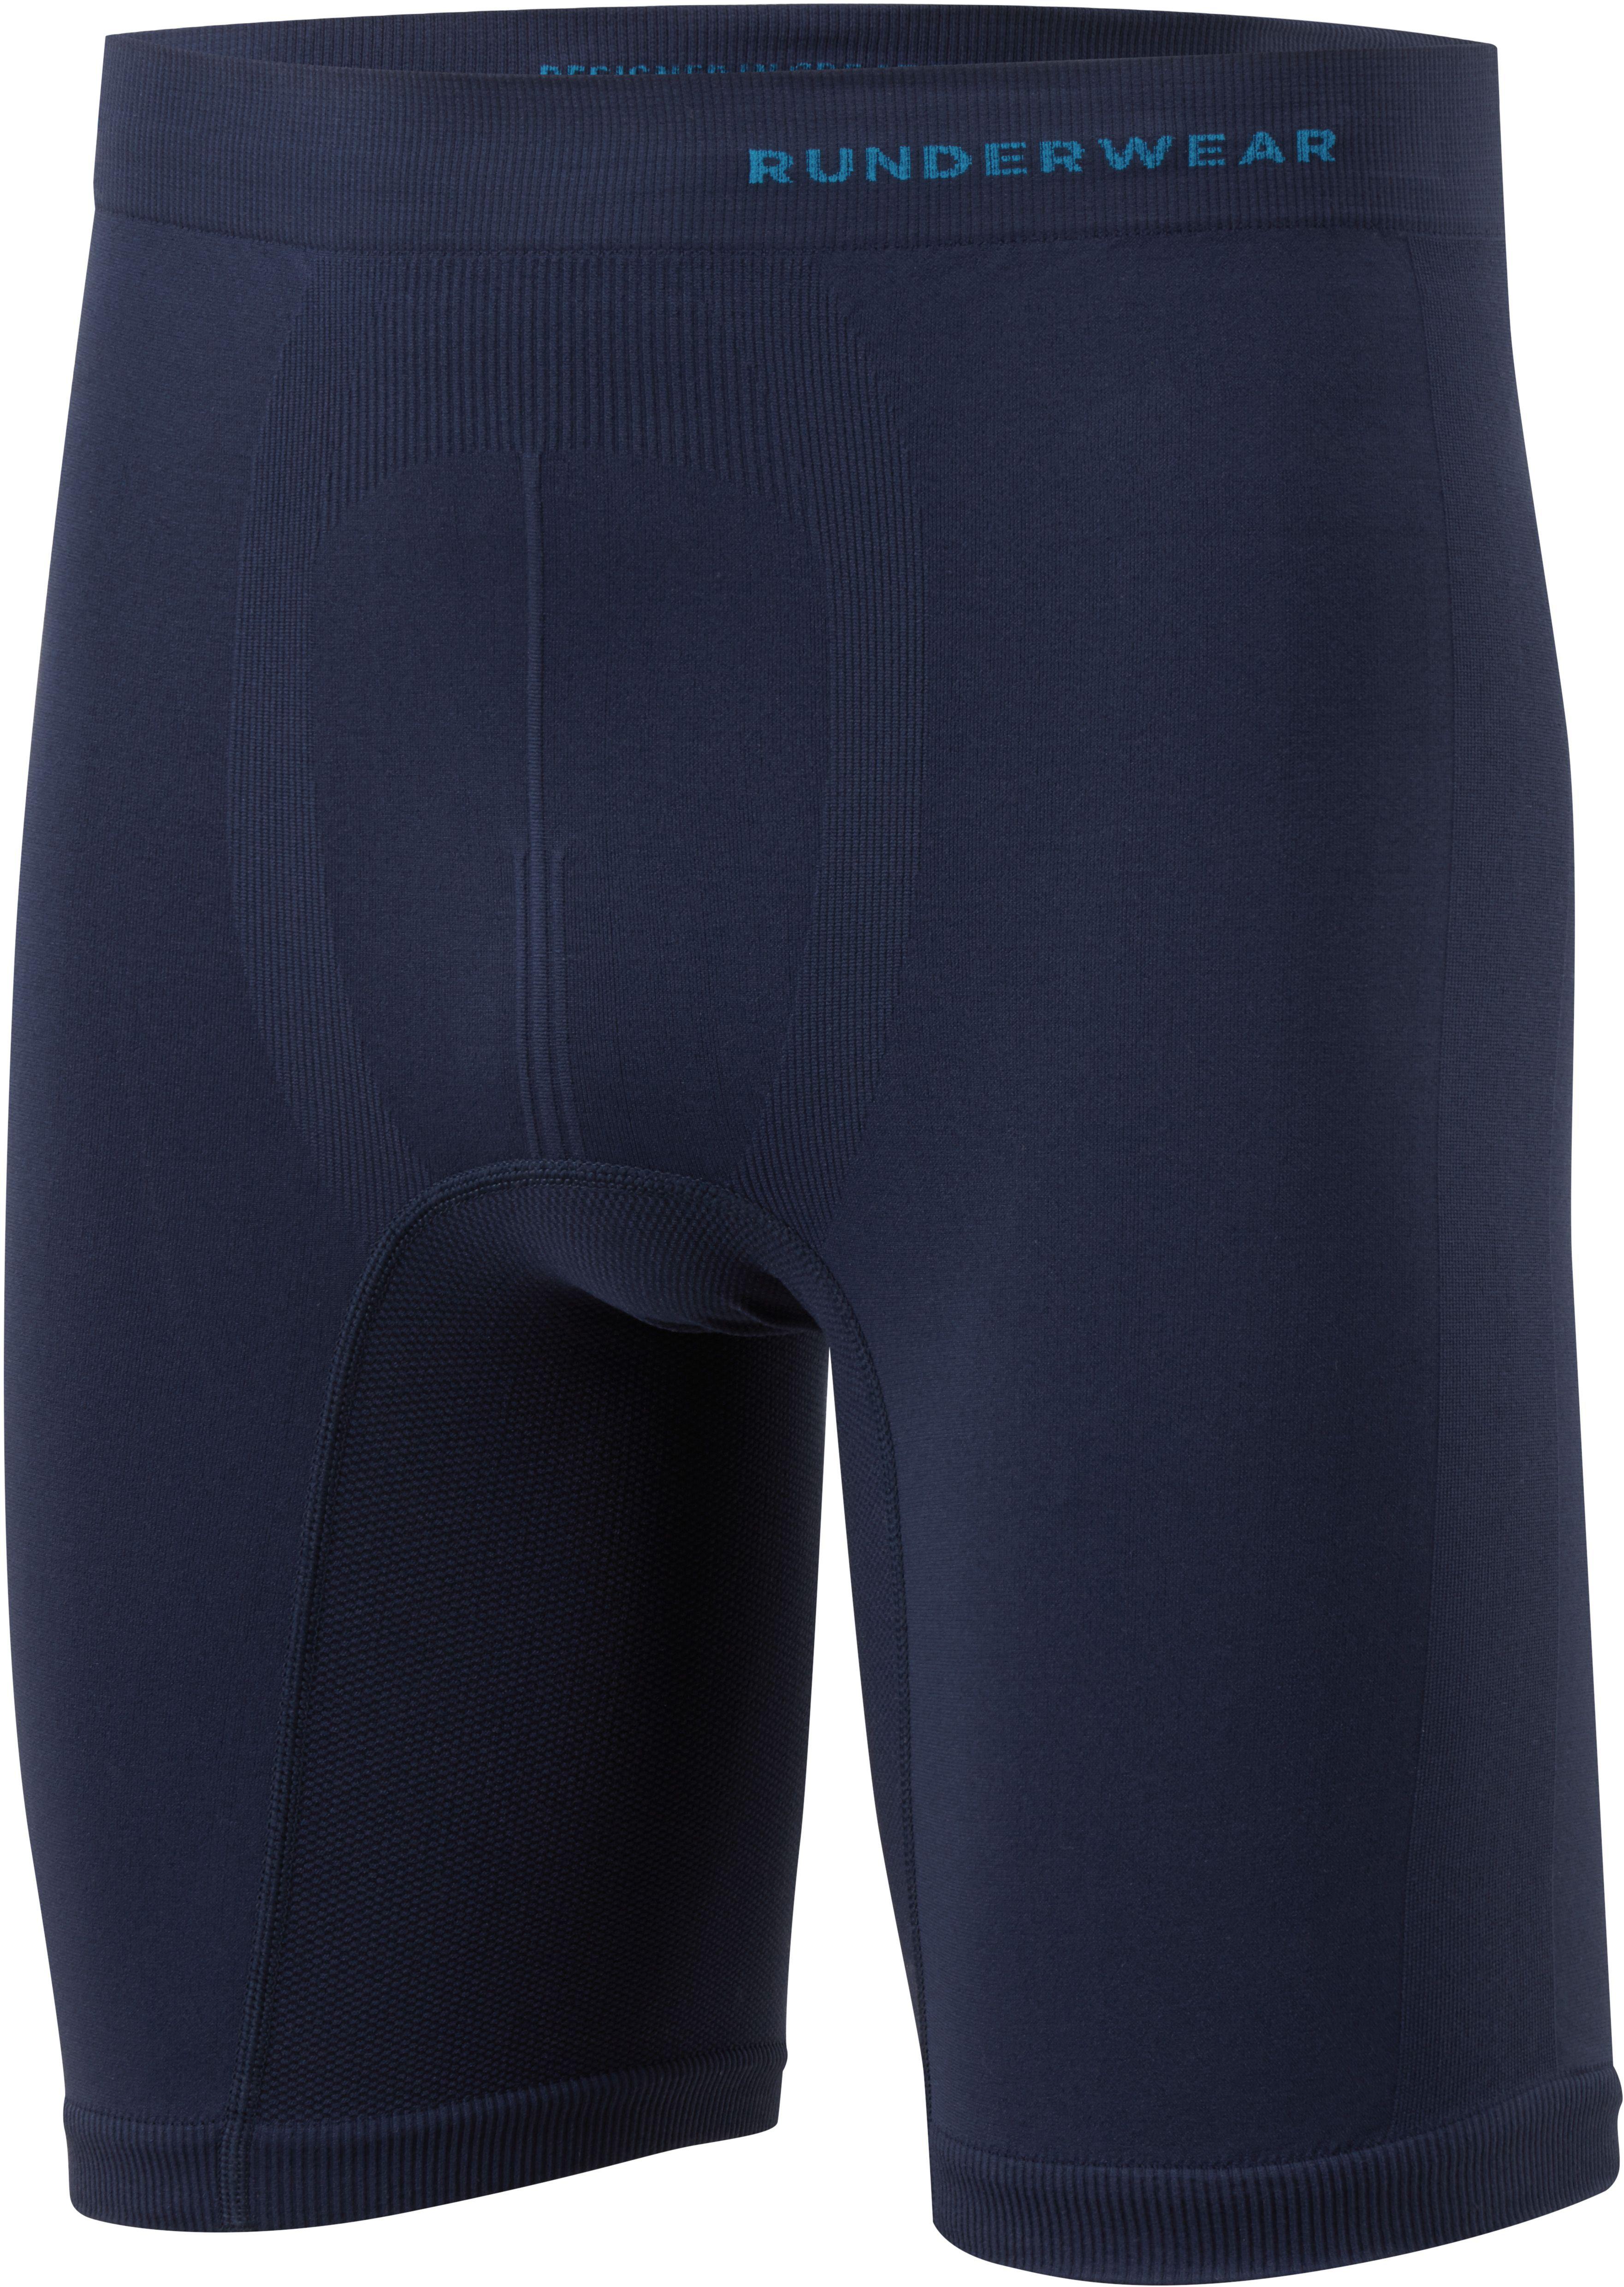 Runderwear Mens Long Boxer Shorts - Navy/navy